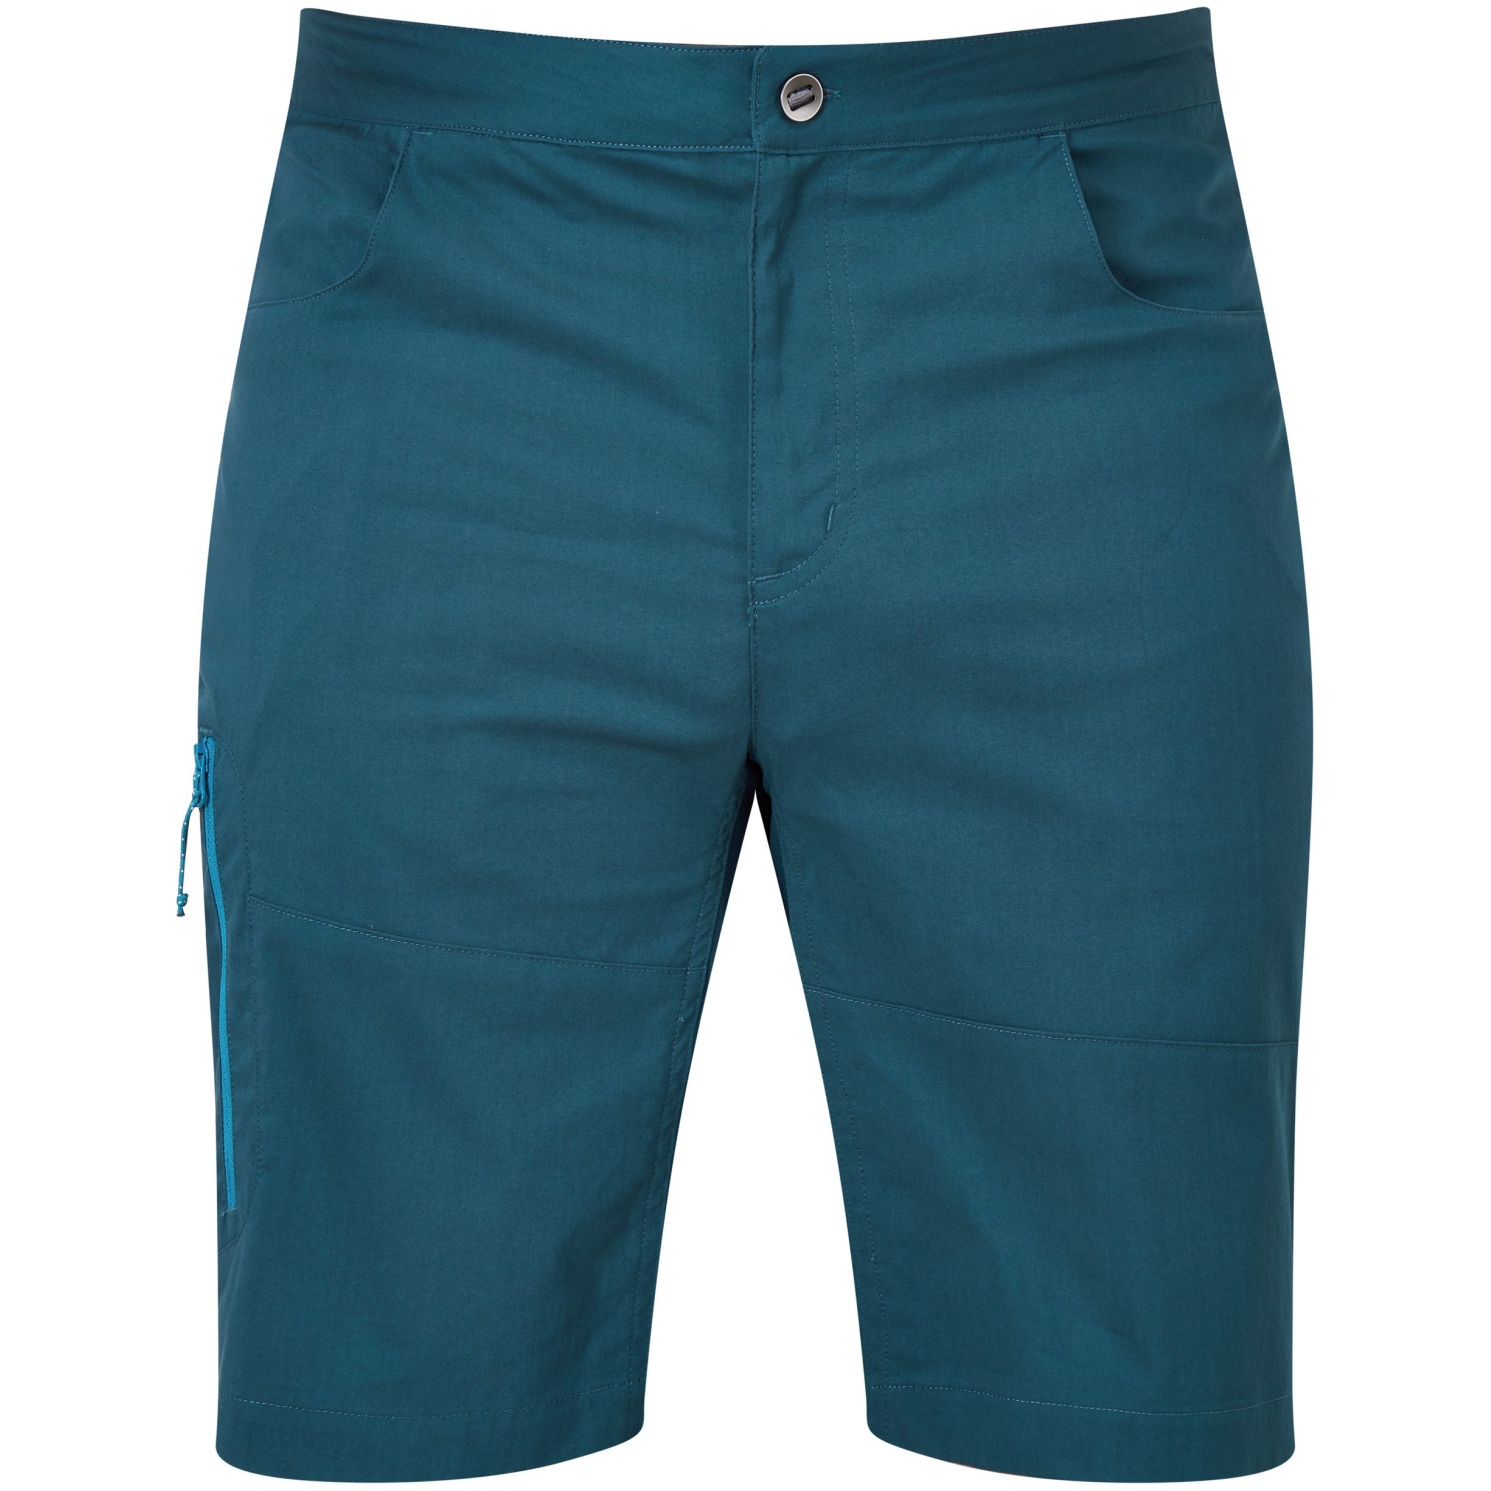 Productfoto van Mountain Equipment Anvil Shorts ME-005981 - majolica blue